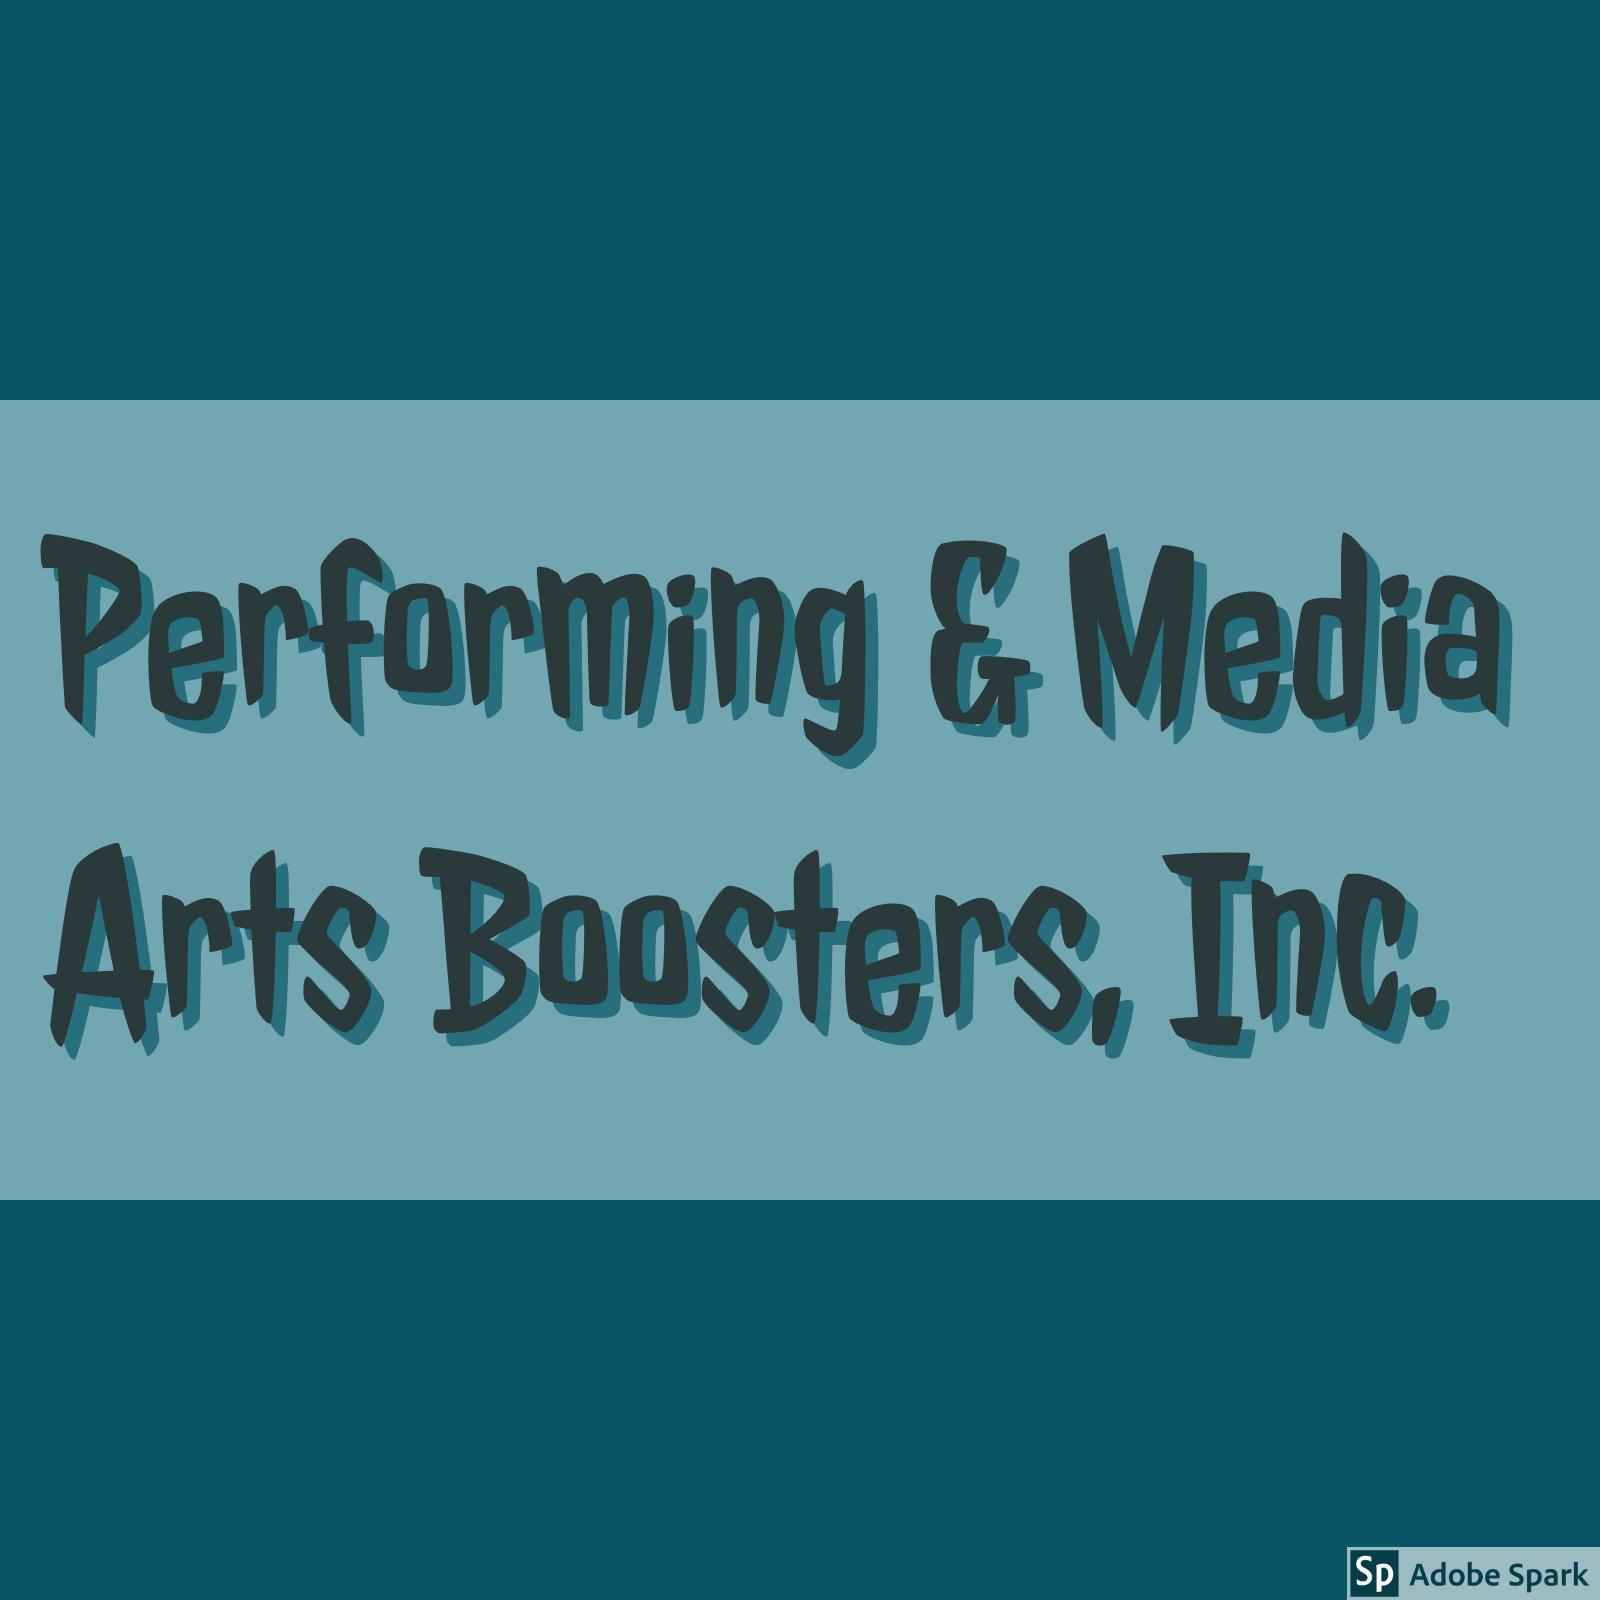 Performing & Media Arts Boosters, Inc. logo